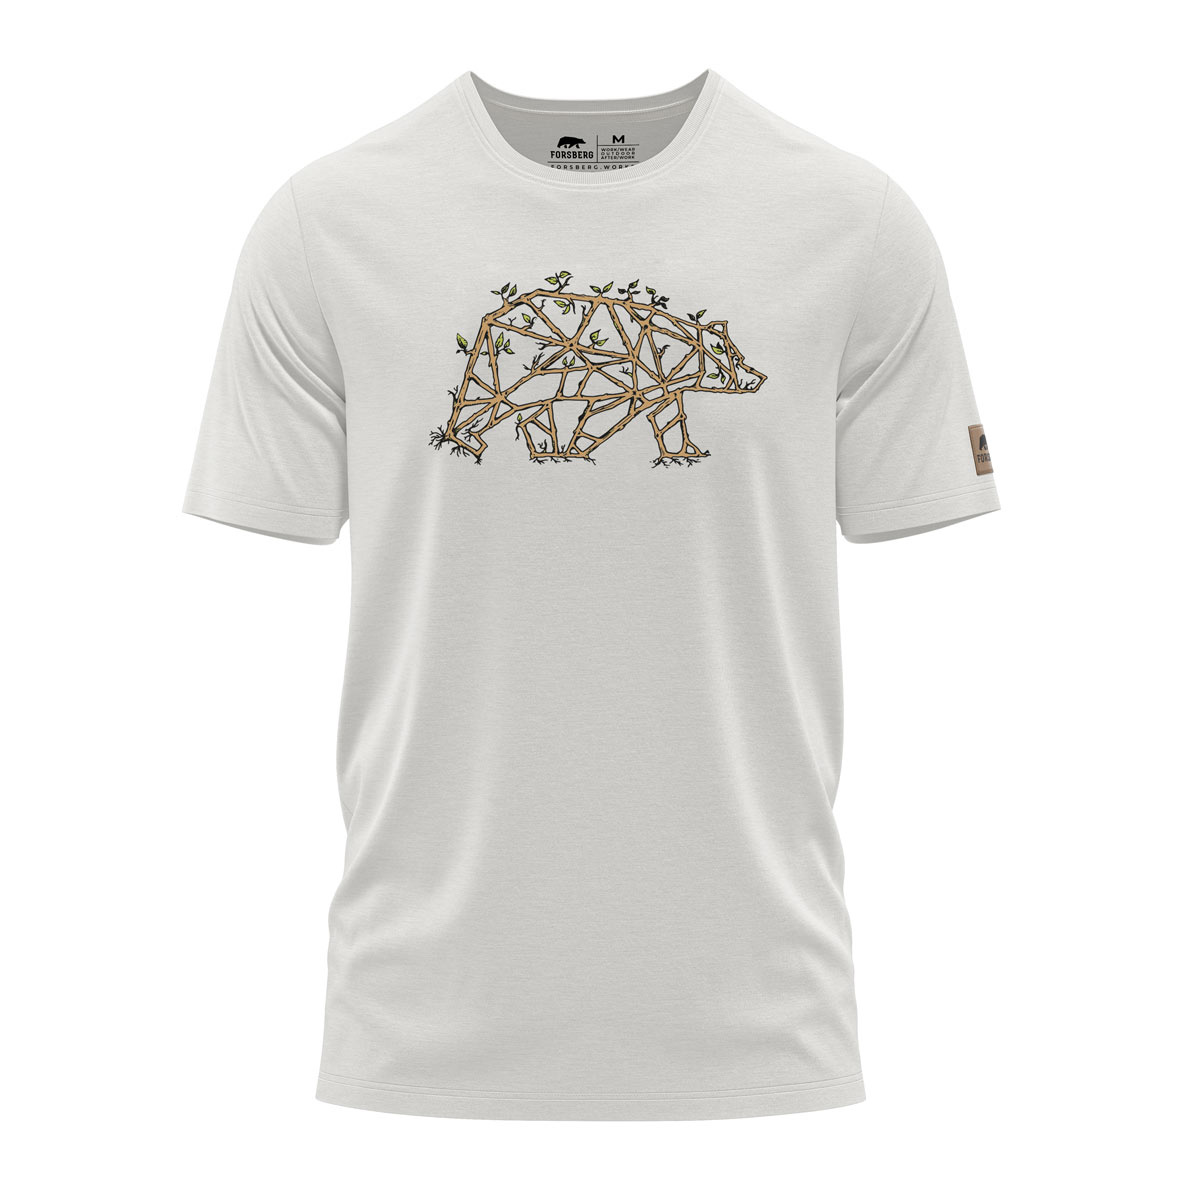 FORSBERG Grenson T-shirt met logo op de borst